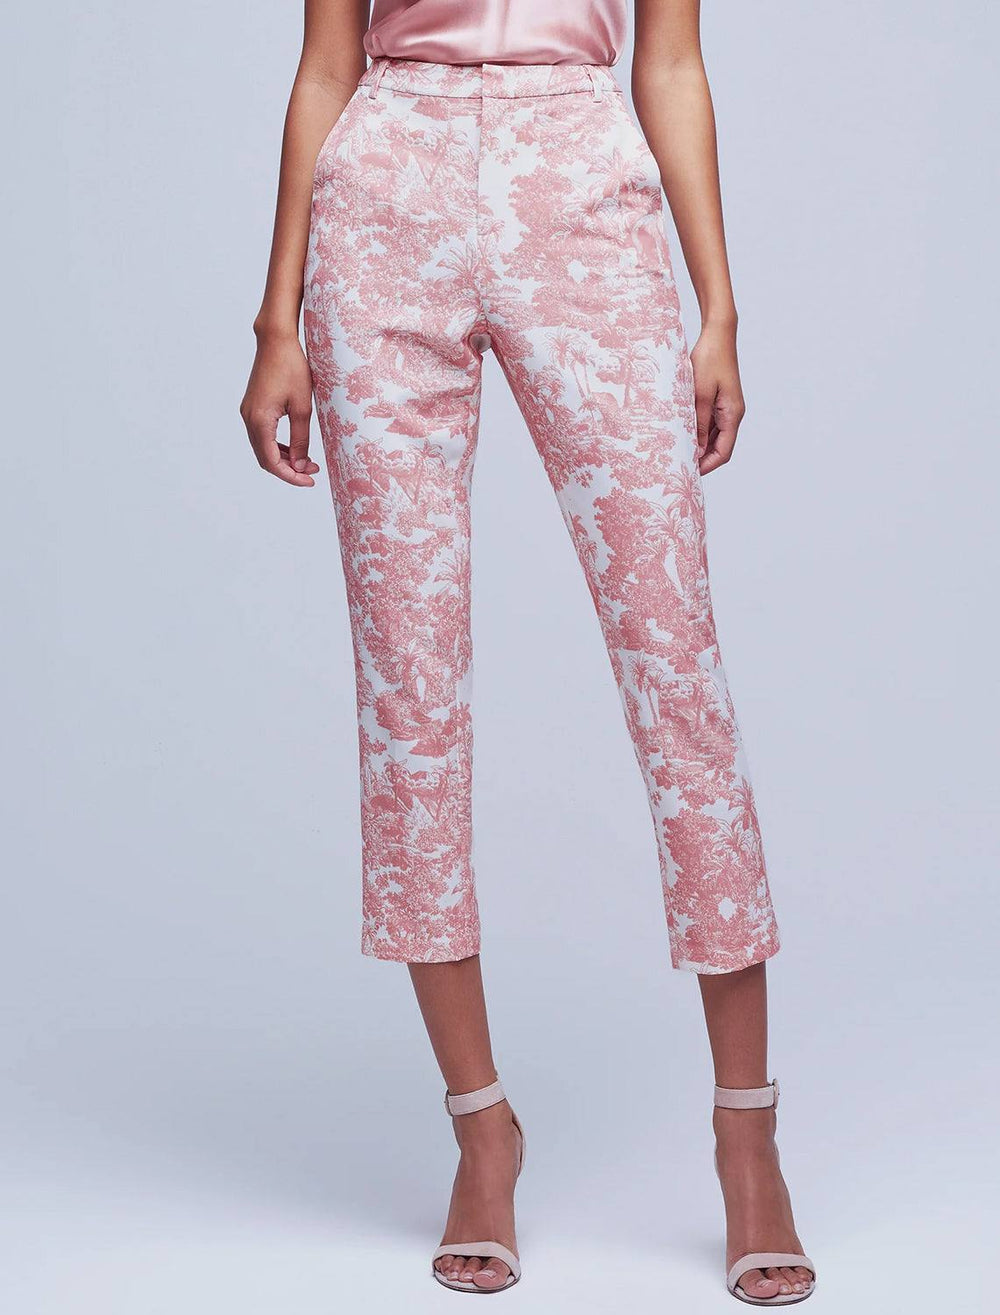 Model wearing L'agence's ludivine trouser in rose multi toile.